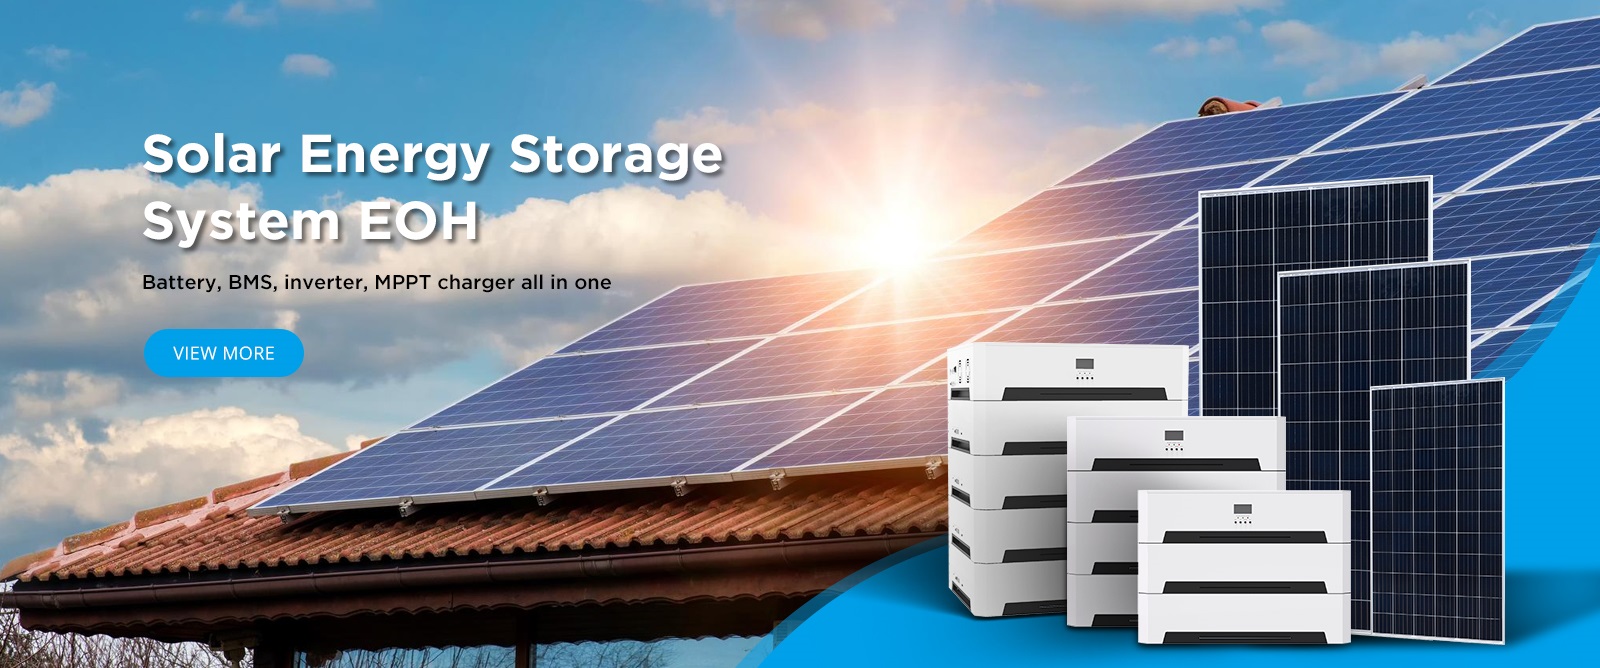 Energy storage and Solar panels